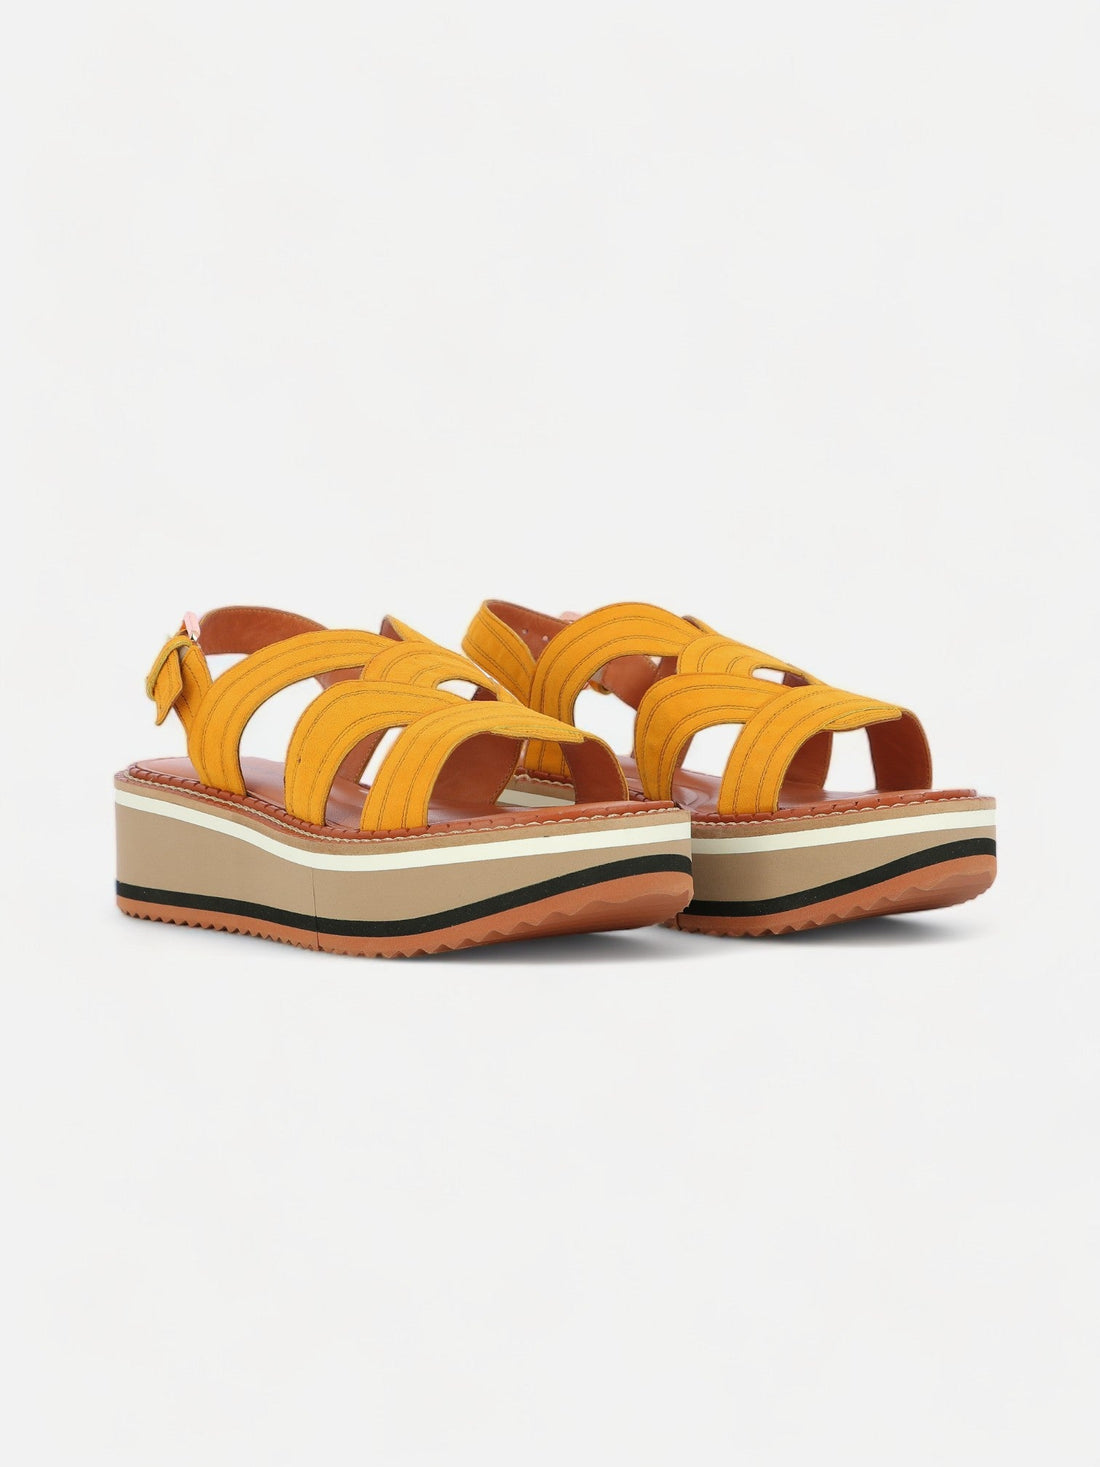 SANDALS - FRESIA sandals, suede mango - 3606063964845 - Clergerie Paris - Europe